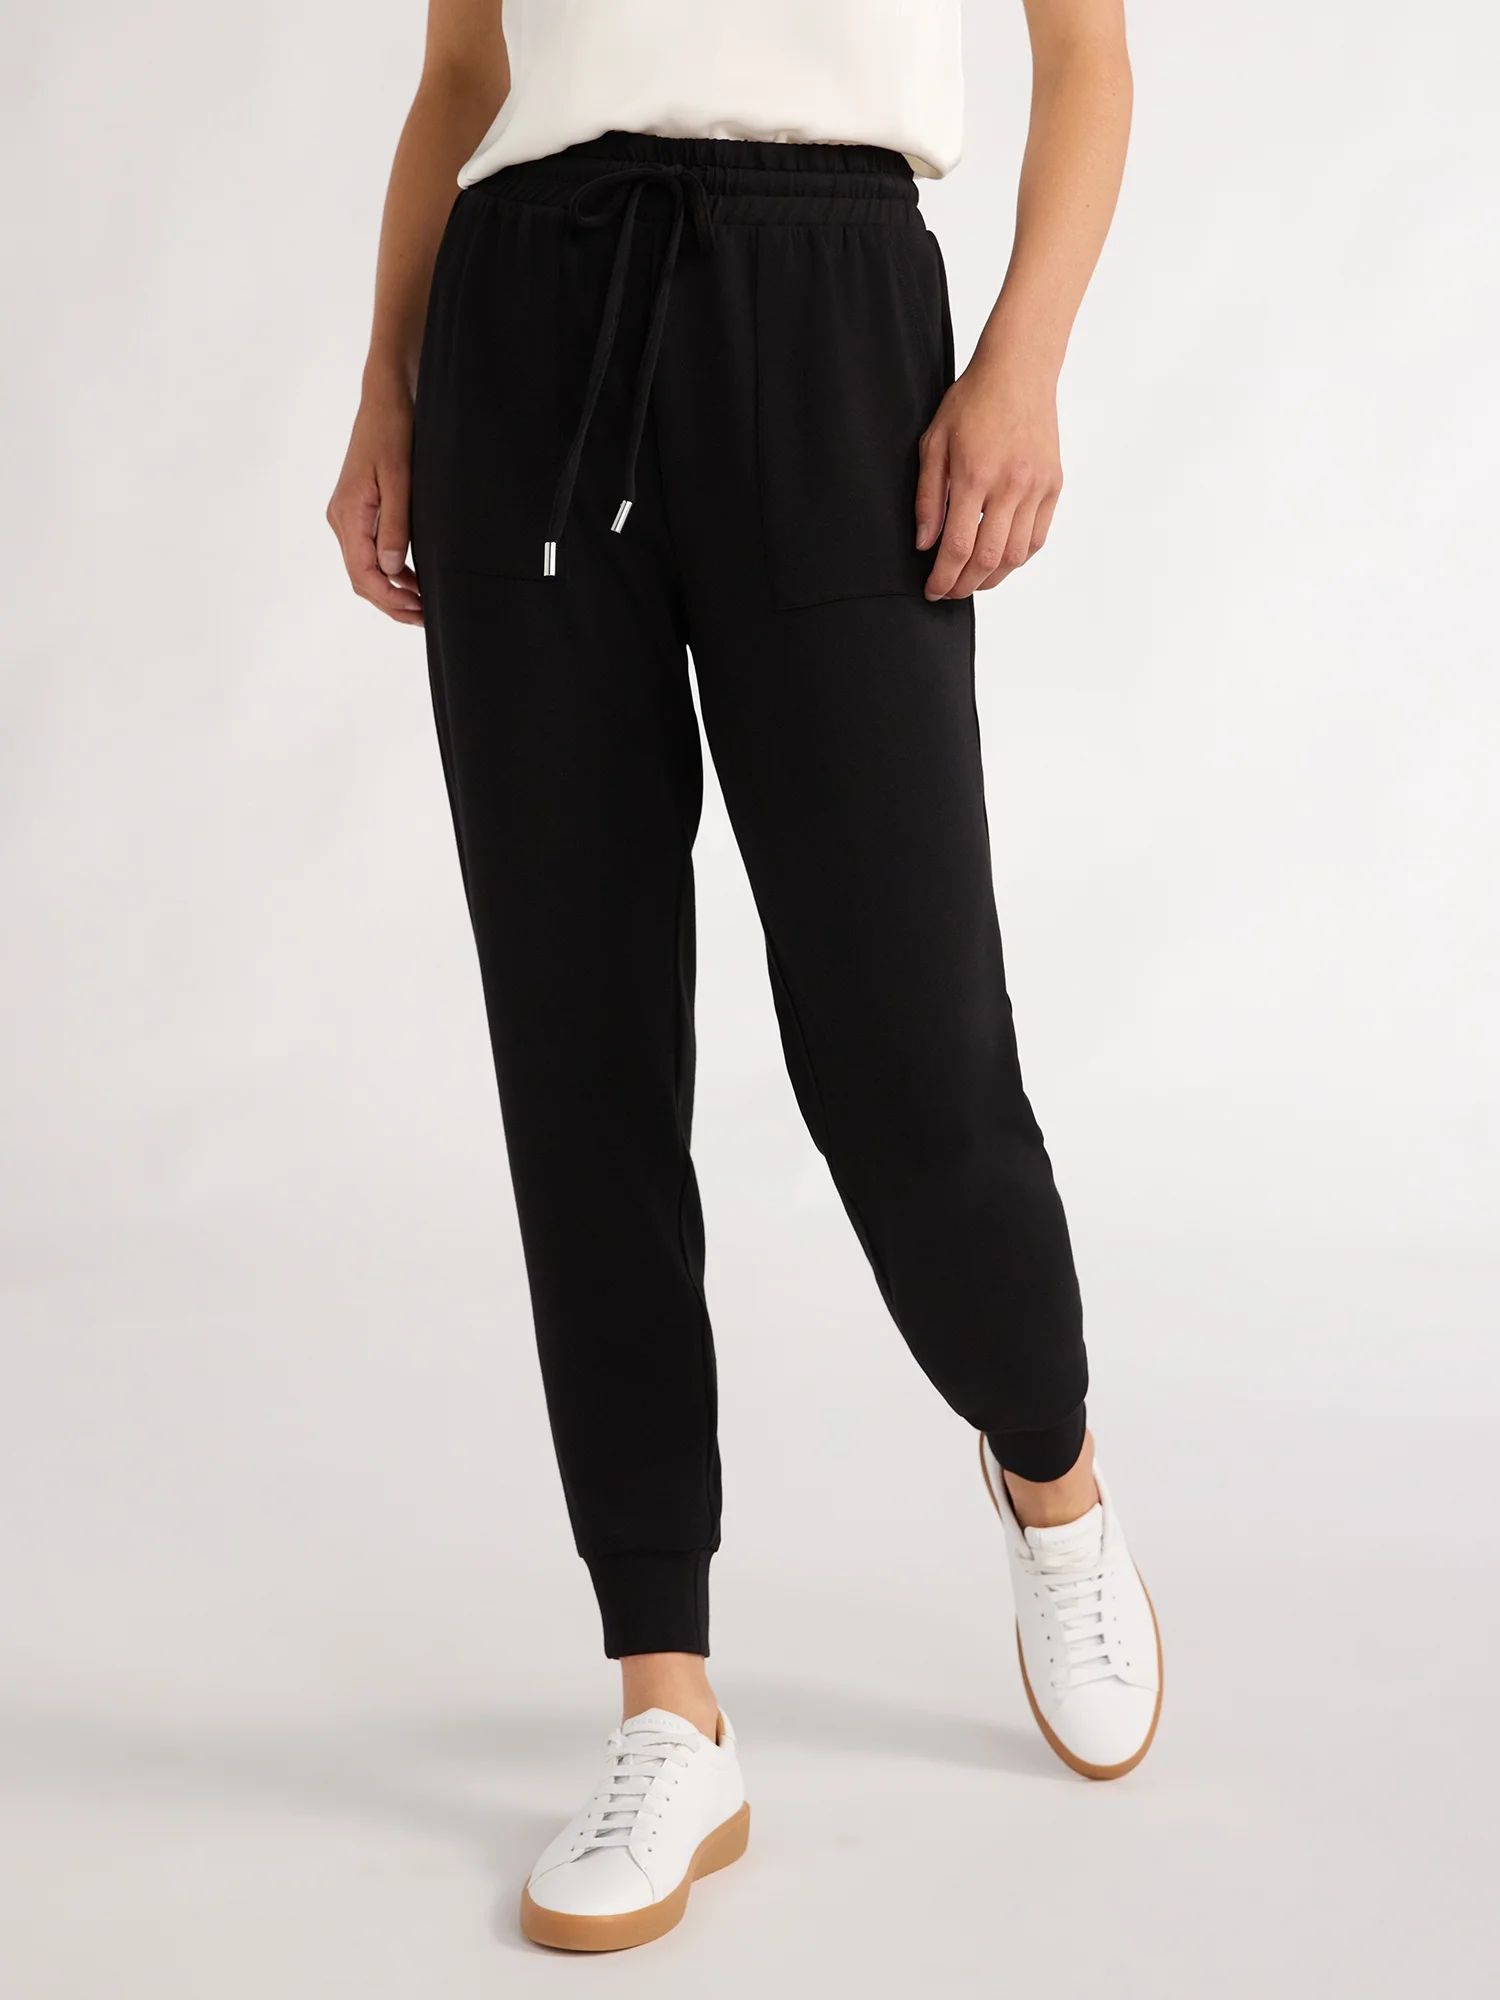 Scoop Women's Ultimate ScubaKnit Pants with Pockets, Sizes XS-XXL | Walmart (US)